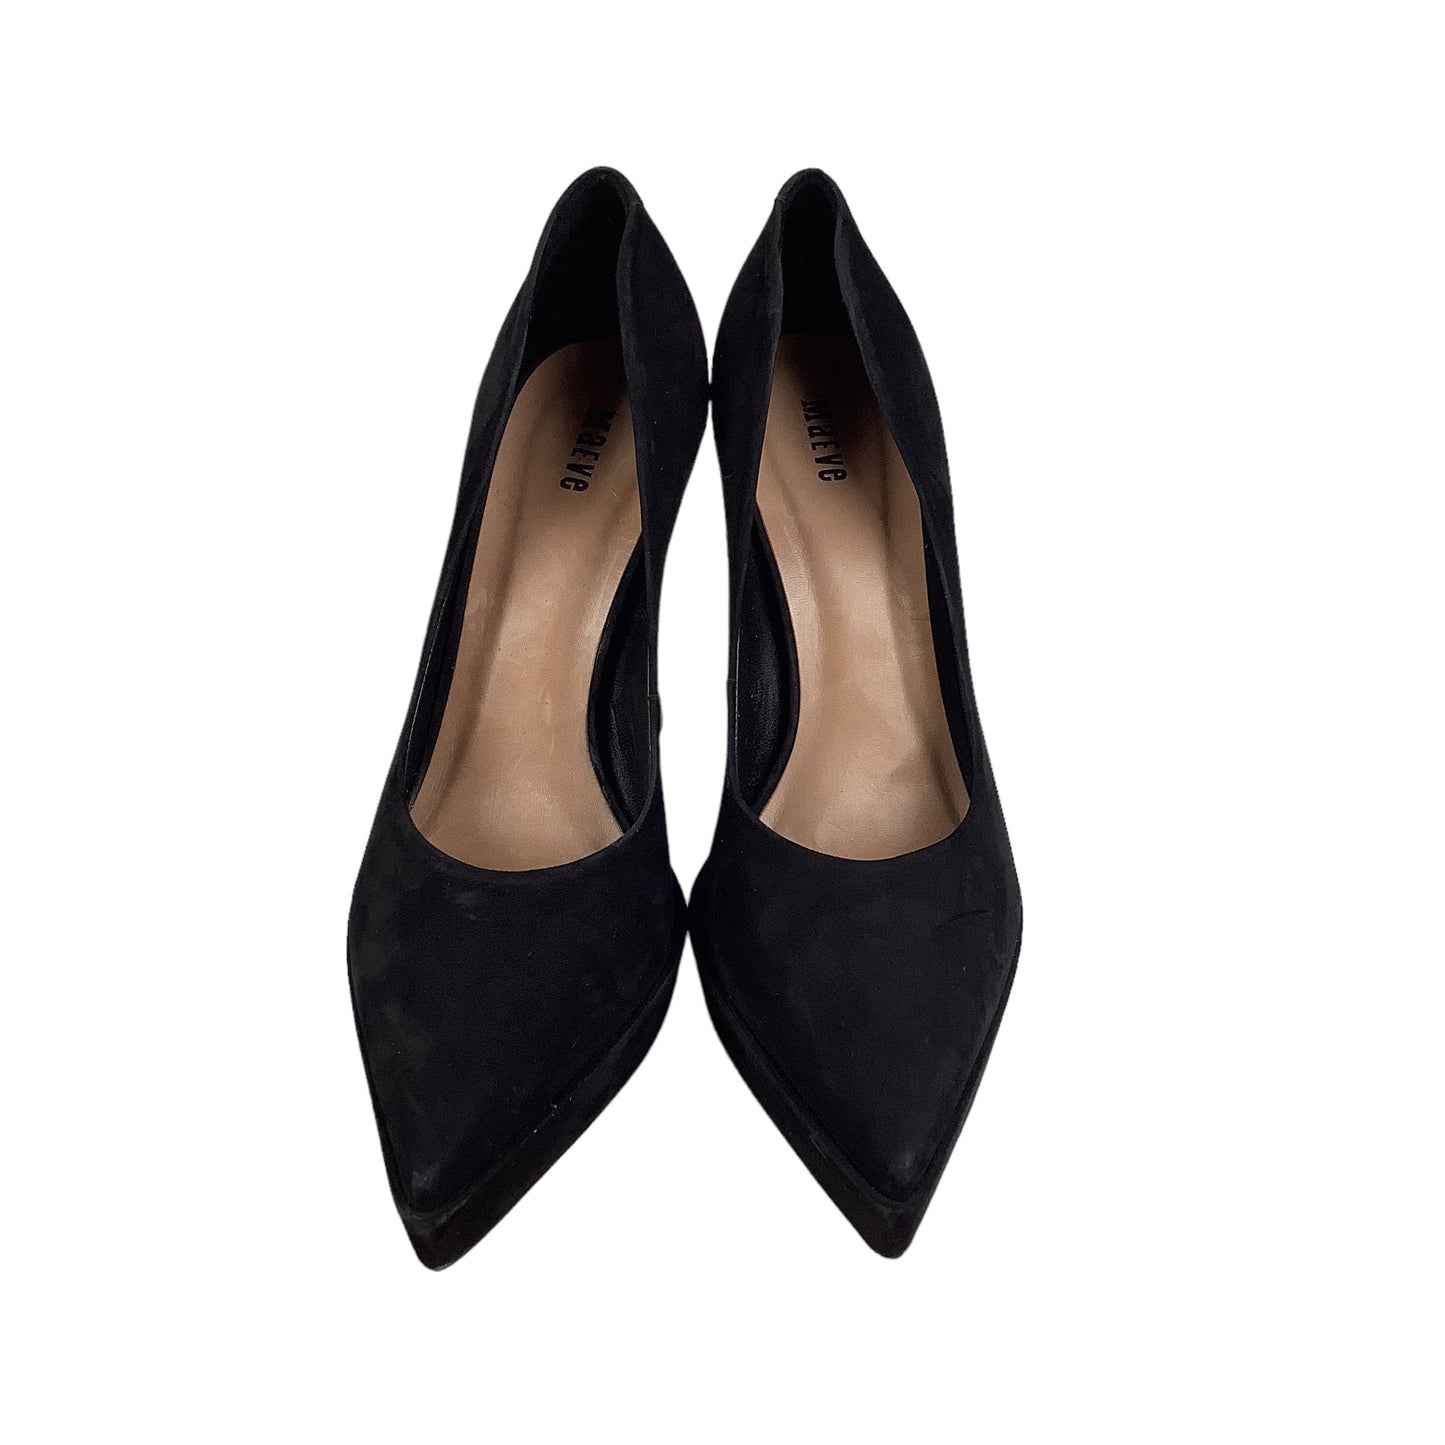 Black Shoes Heels Stiletto Maeve, Size 8.5 (39)